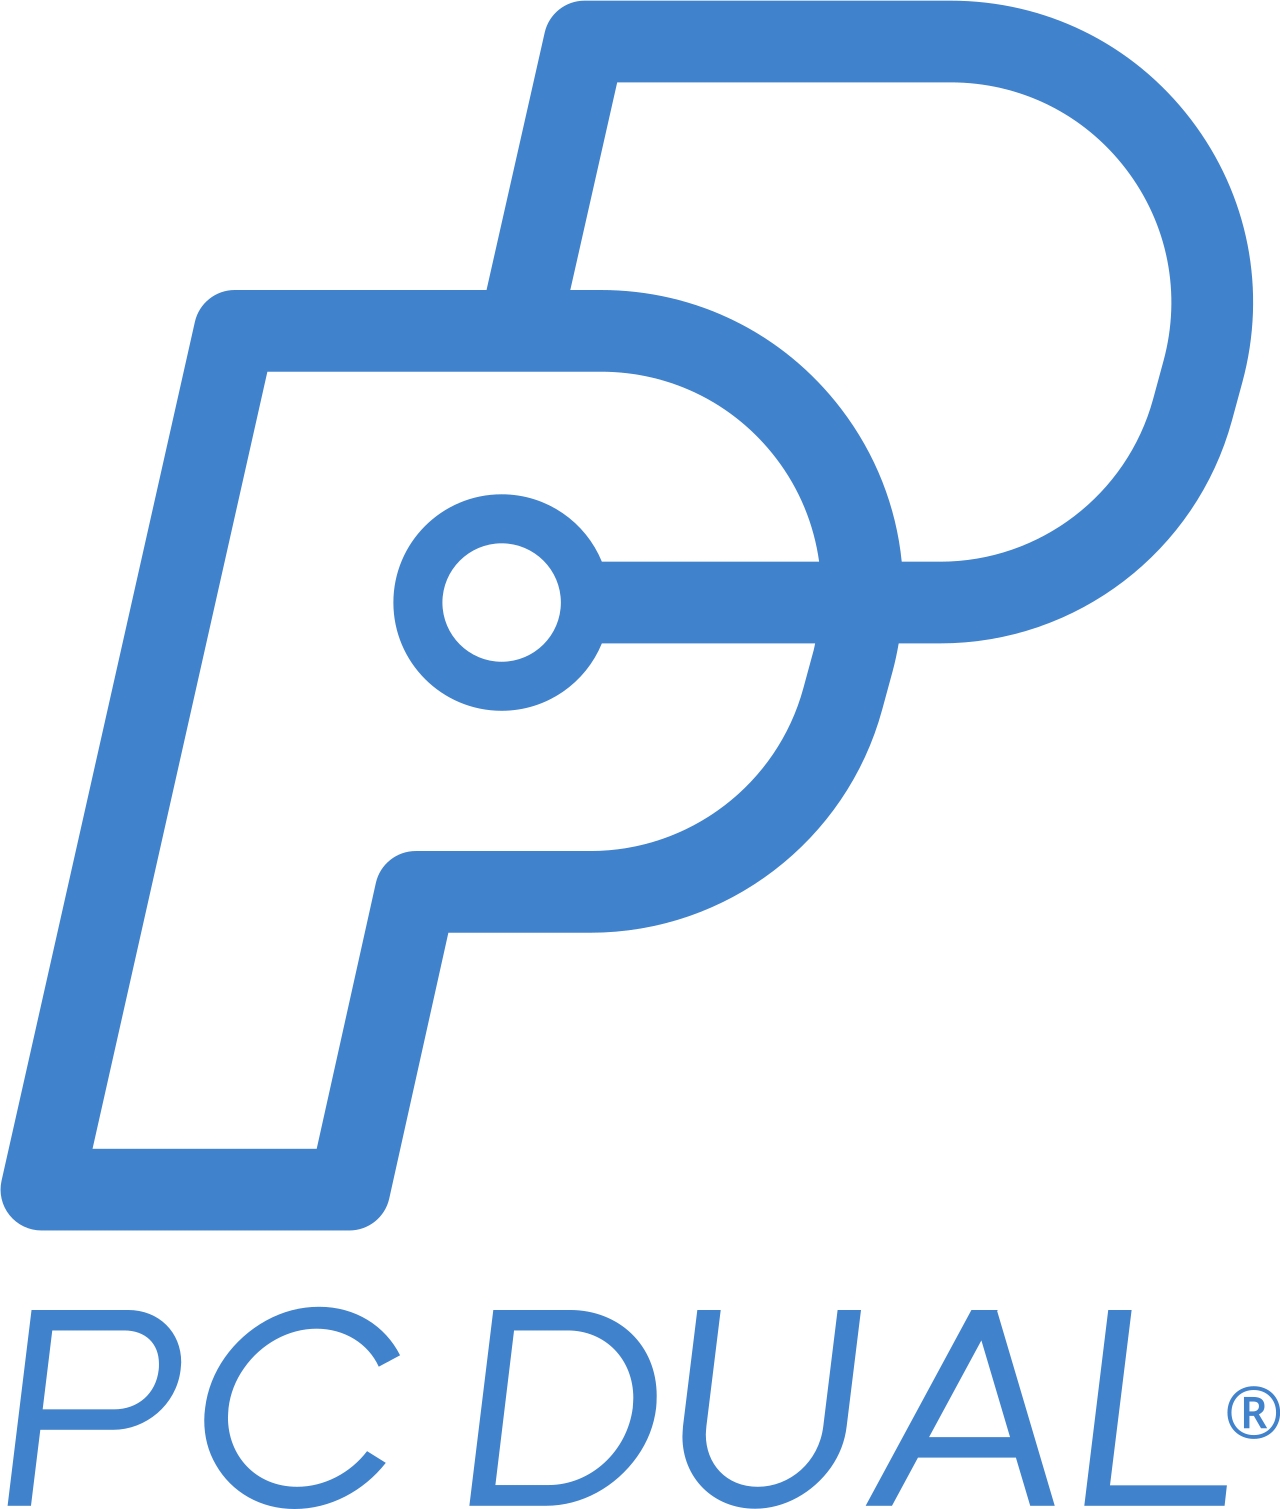 PC DUAL's web page